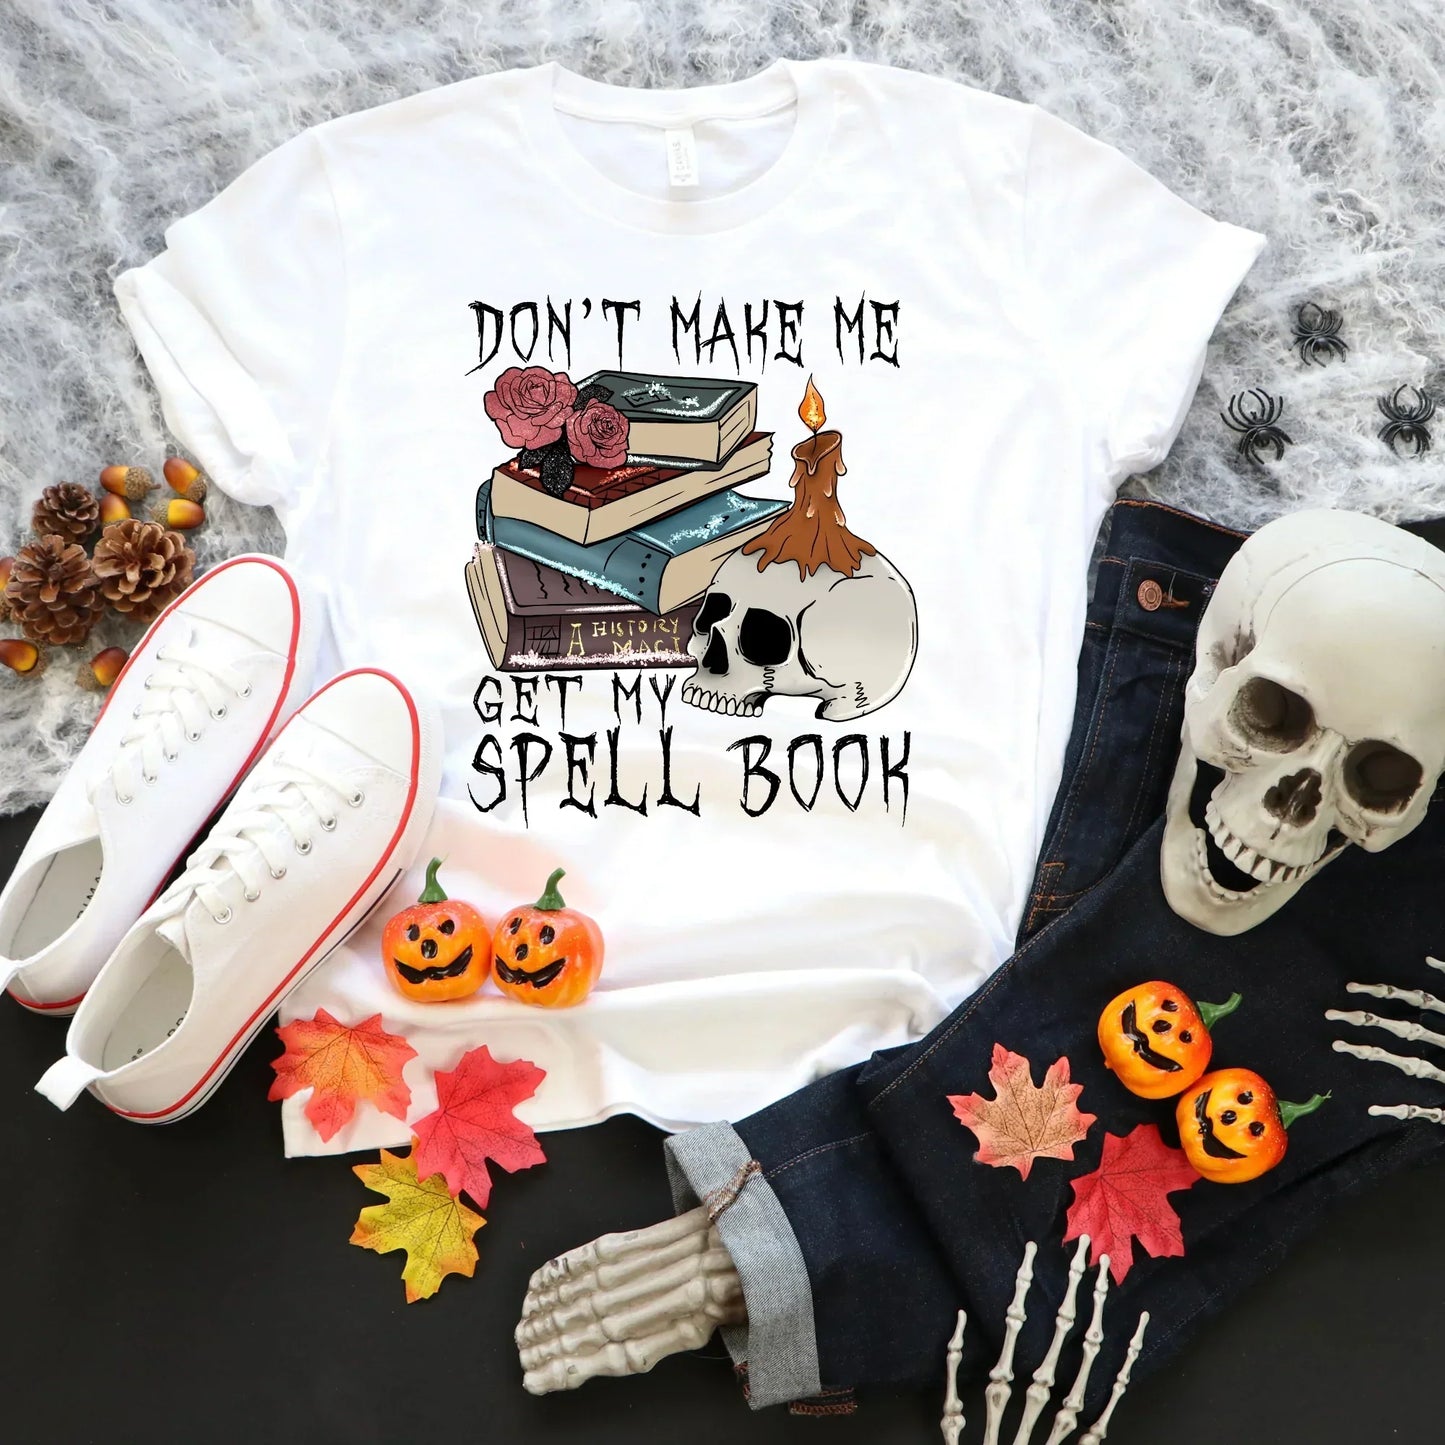 Spell Book, Gothic Shirt, Witchy Vibes, Halloween Sweatshirt, Moon Shirt, Skull Shirt, Goth Style Grunge Shirt, Aesthetic Clothing, Cat Shirt, Witch Tee